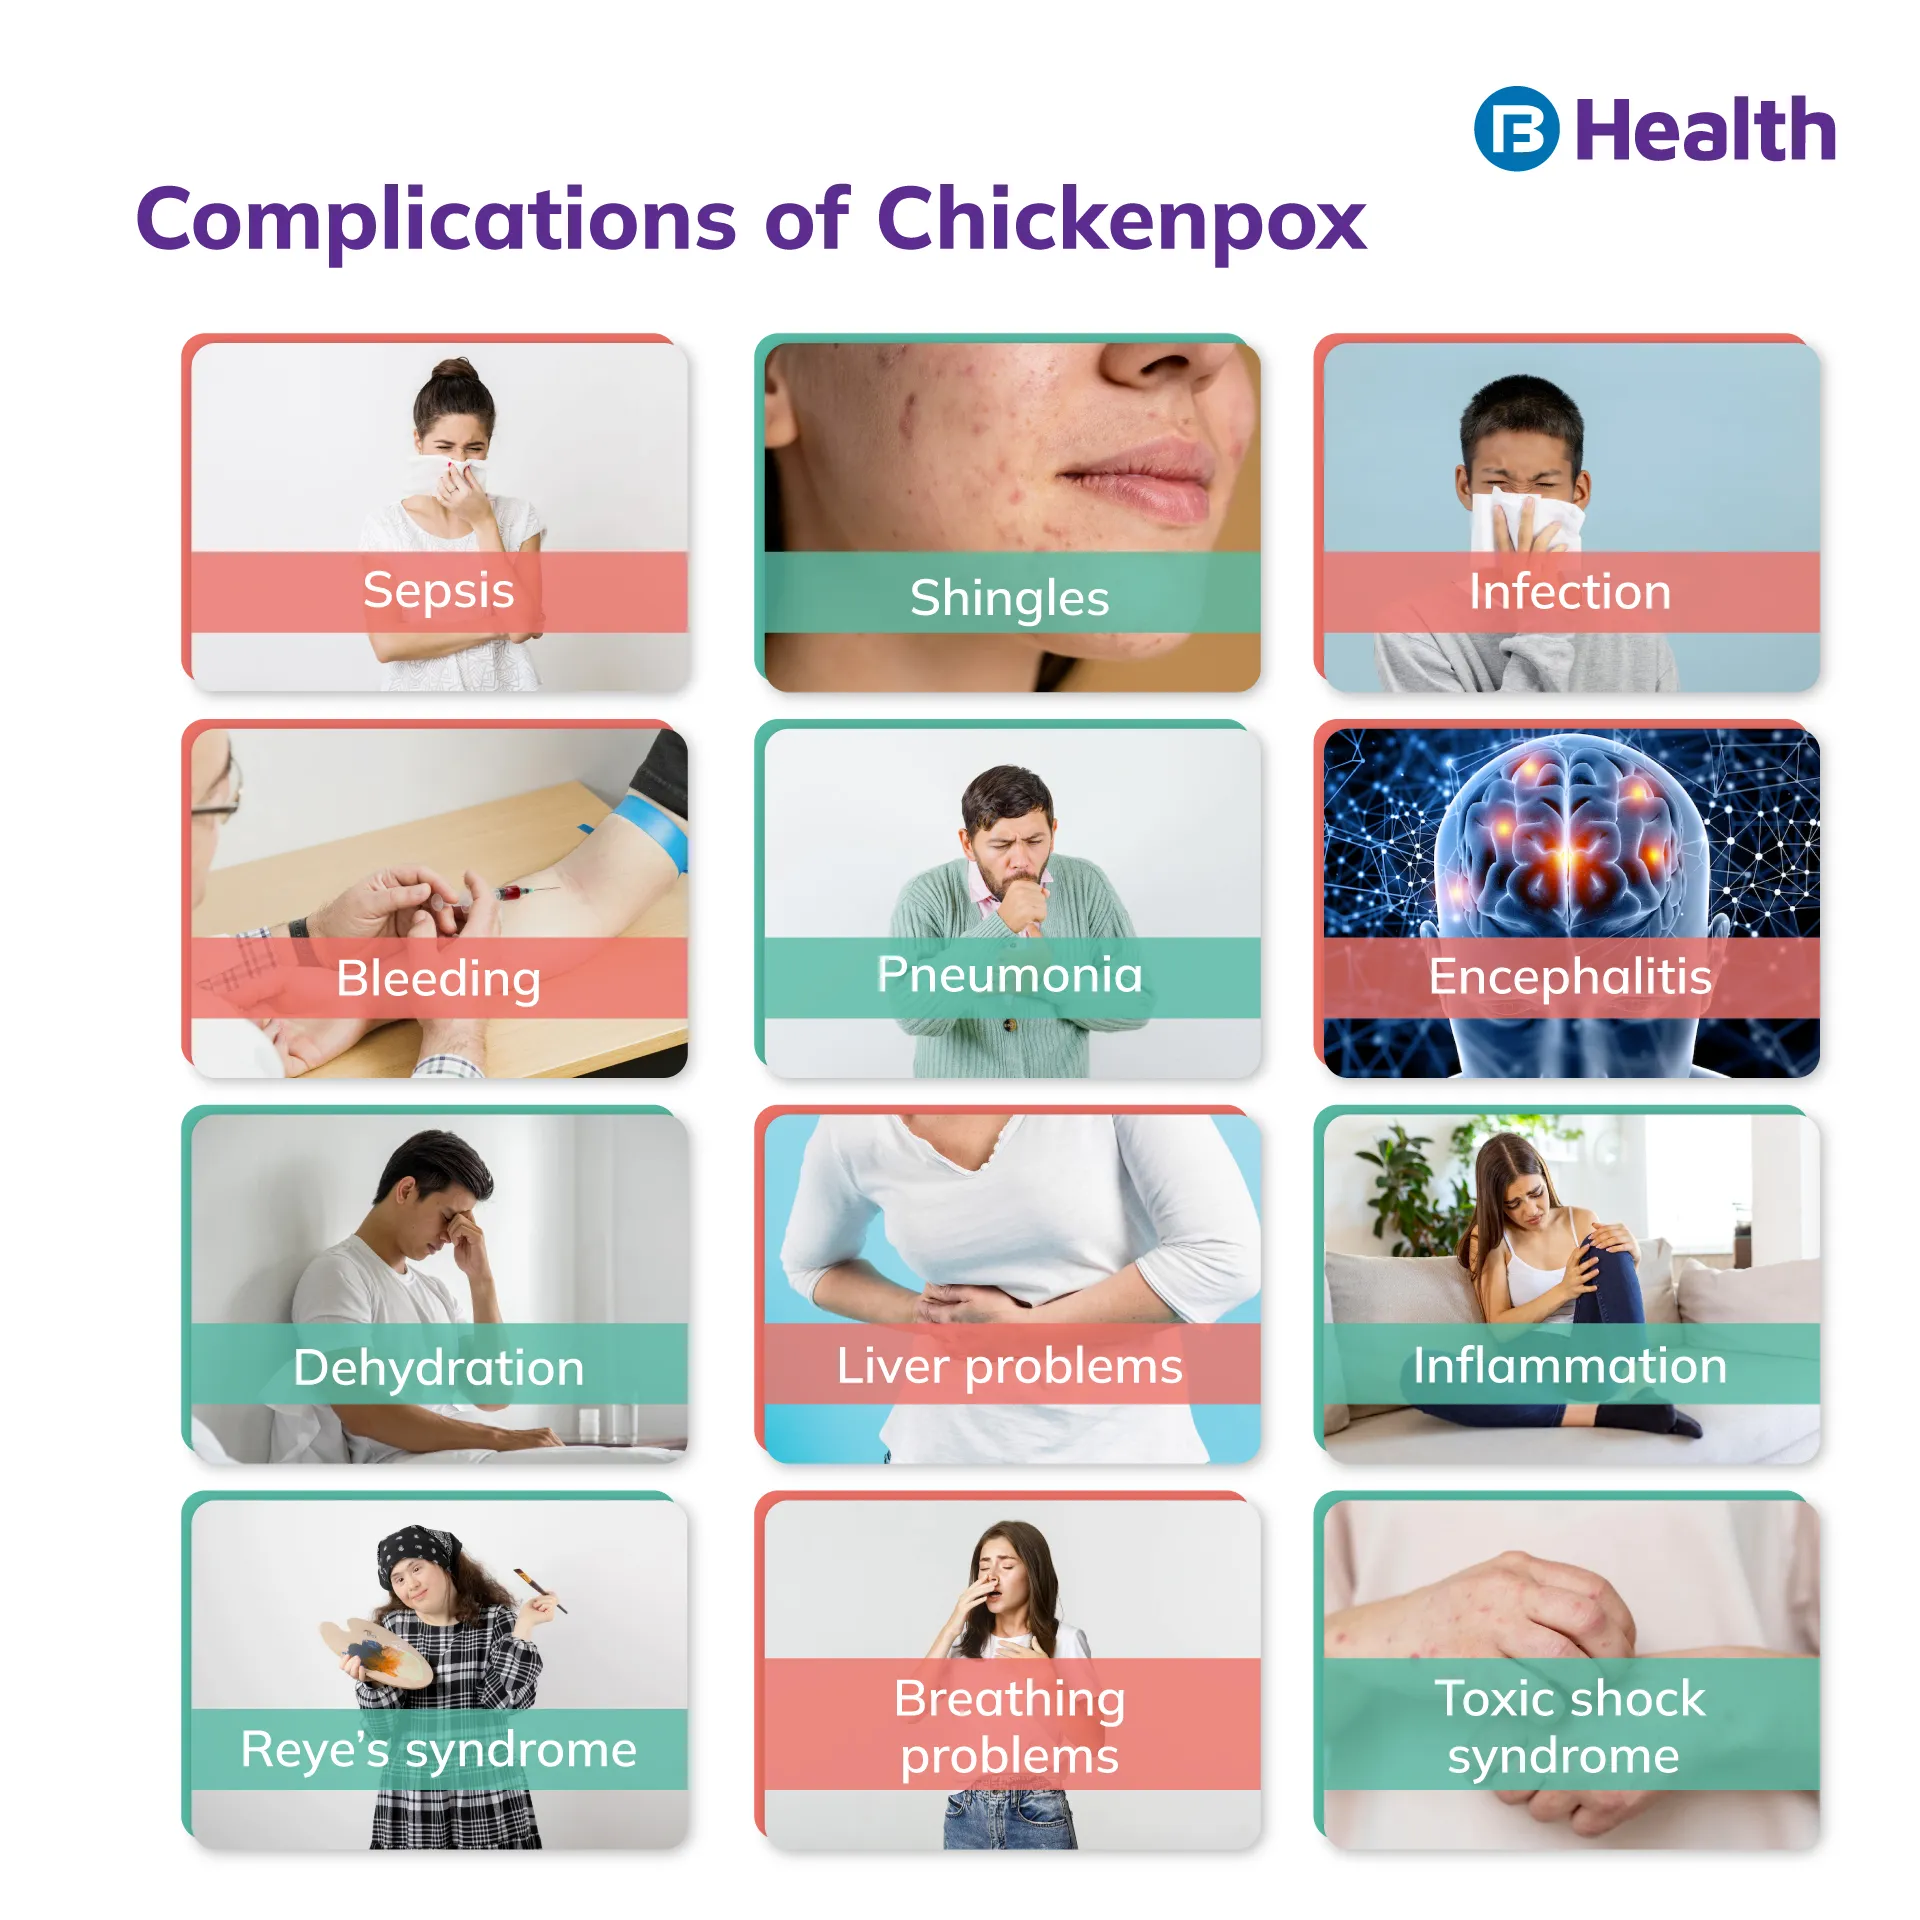 Chickenpox complications